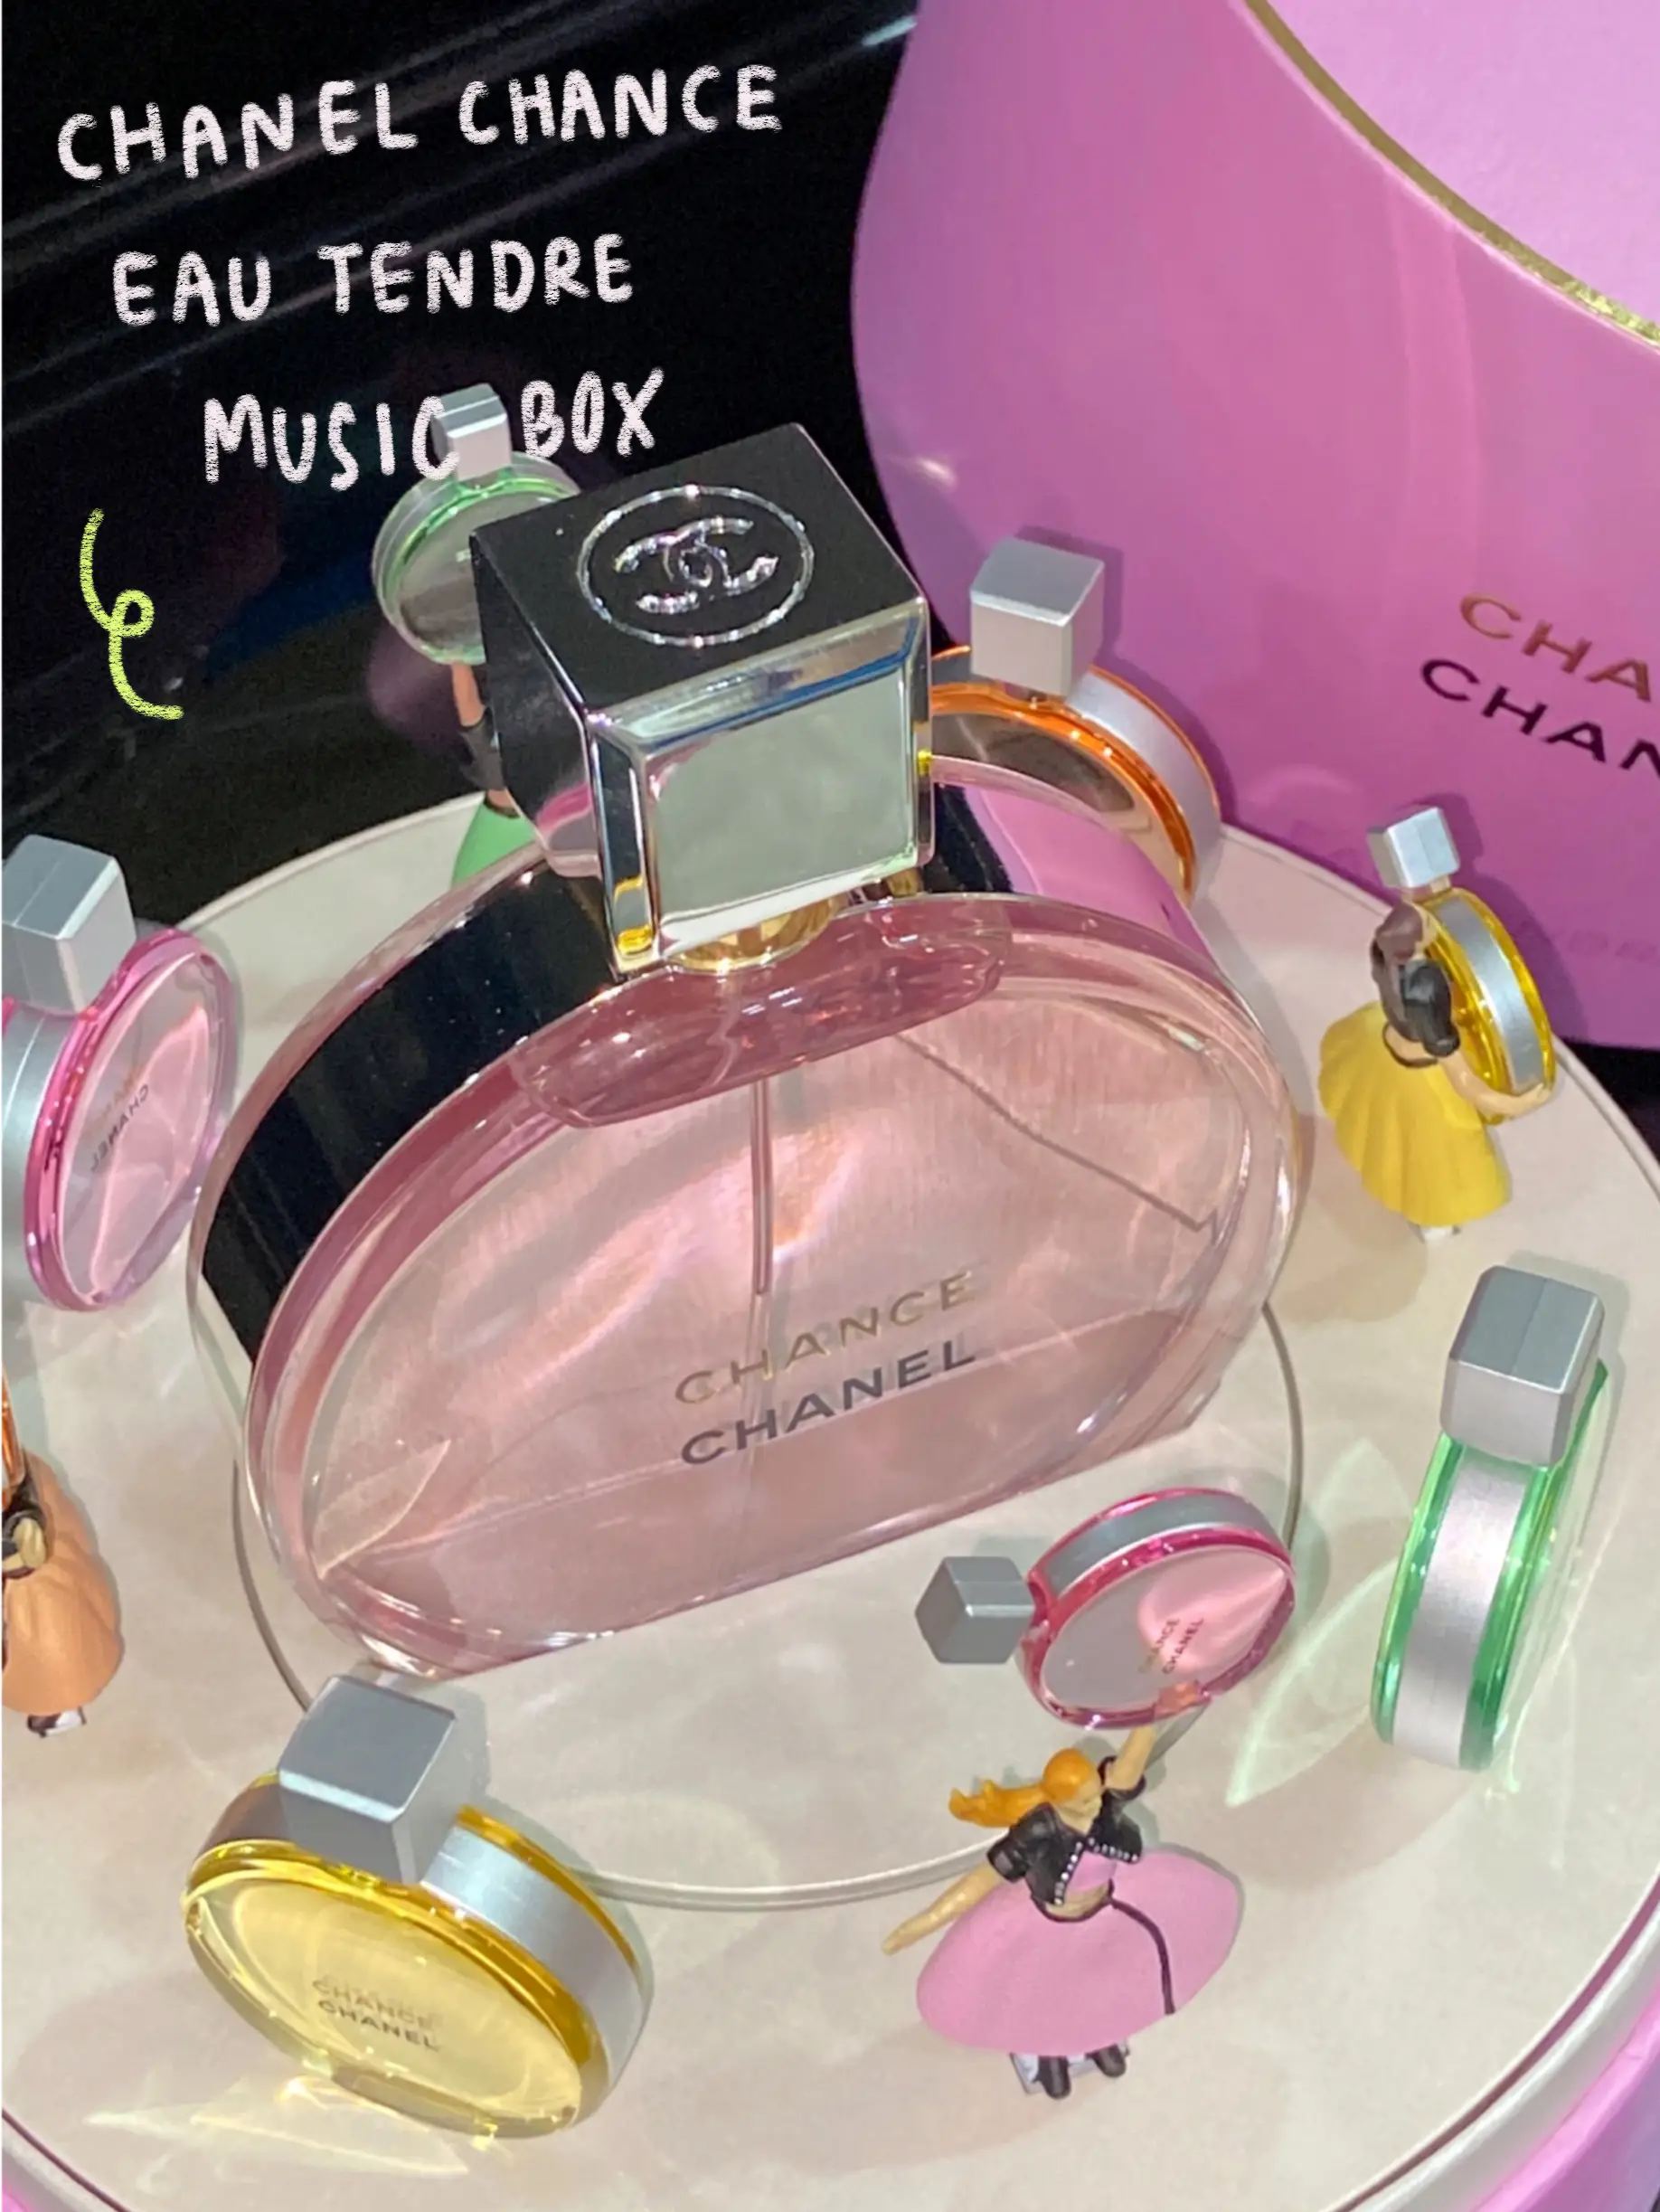 Chanel CHANCE EAU TENDRE LIMITED EDITION EAU DE PARFUM MUSIC BOX, Beauty &  Personal Care, Fragrance & Deodorants on Carousell